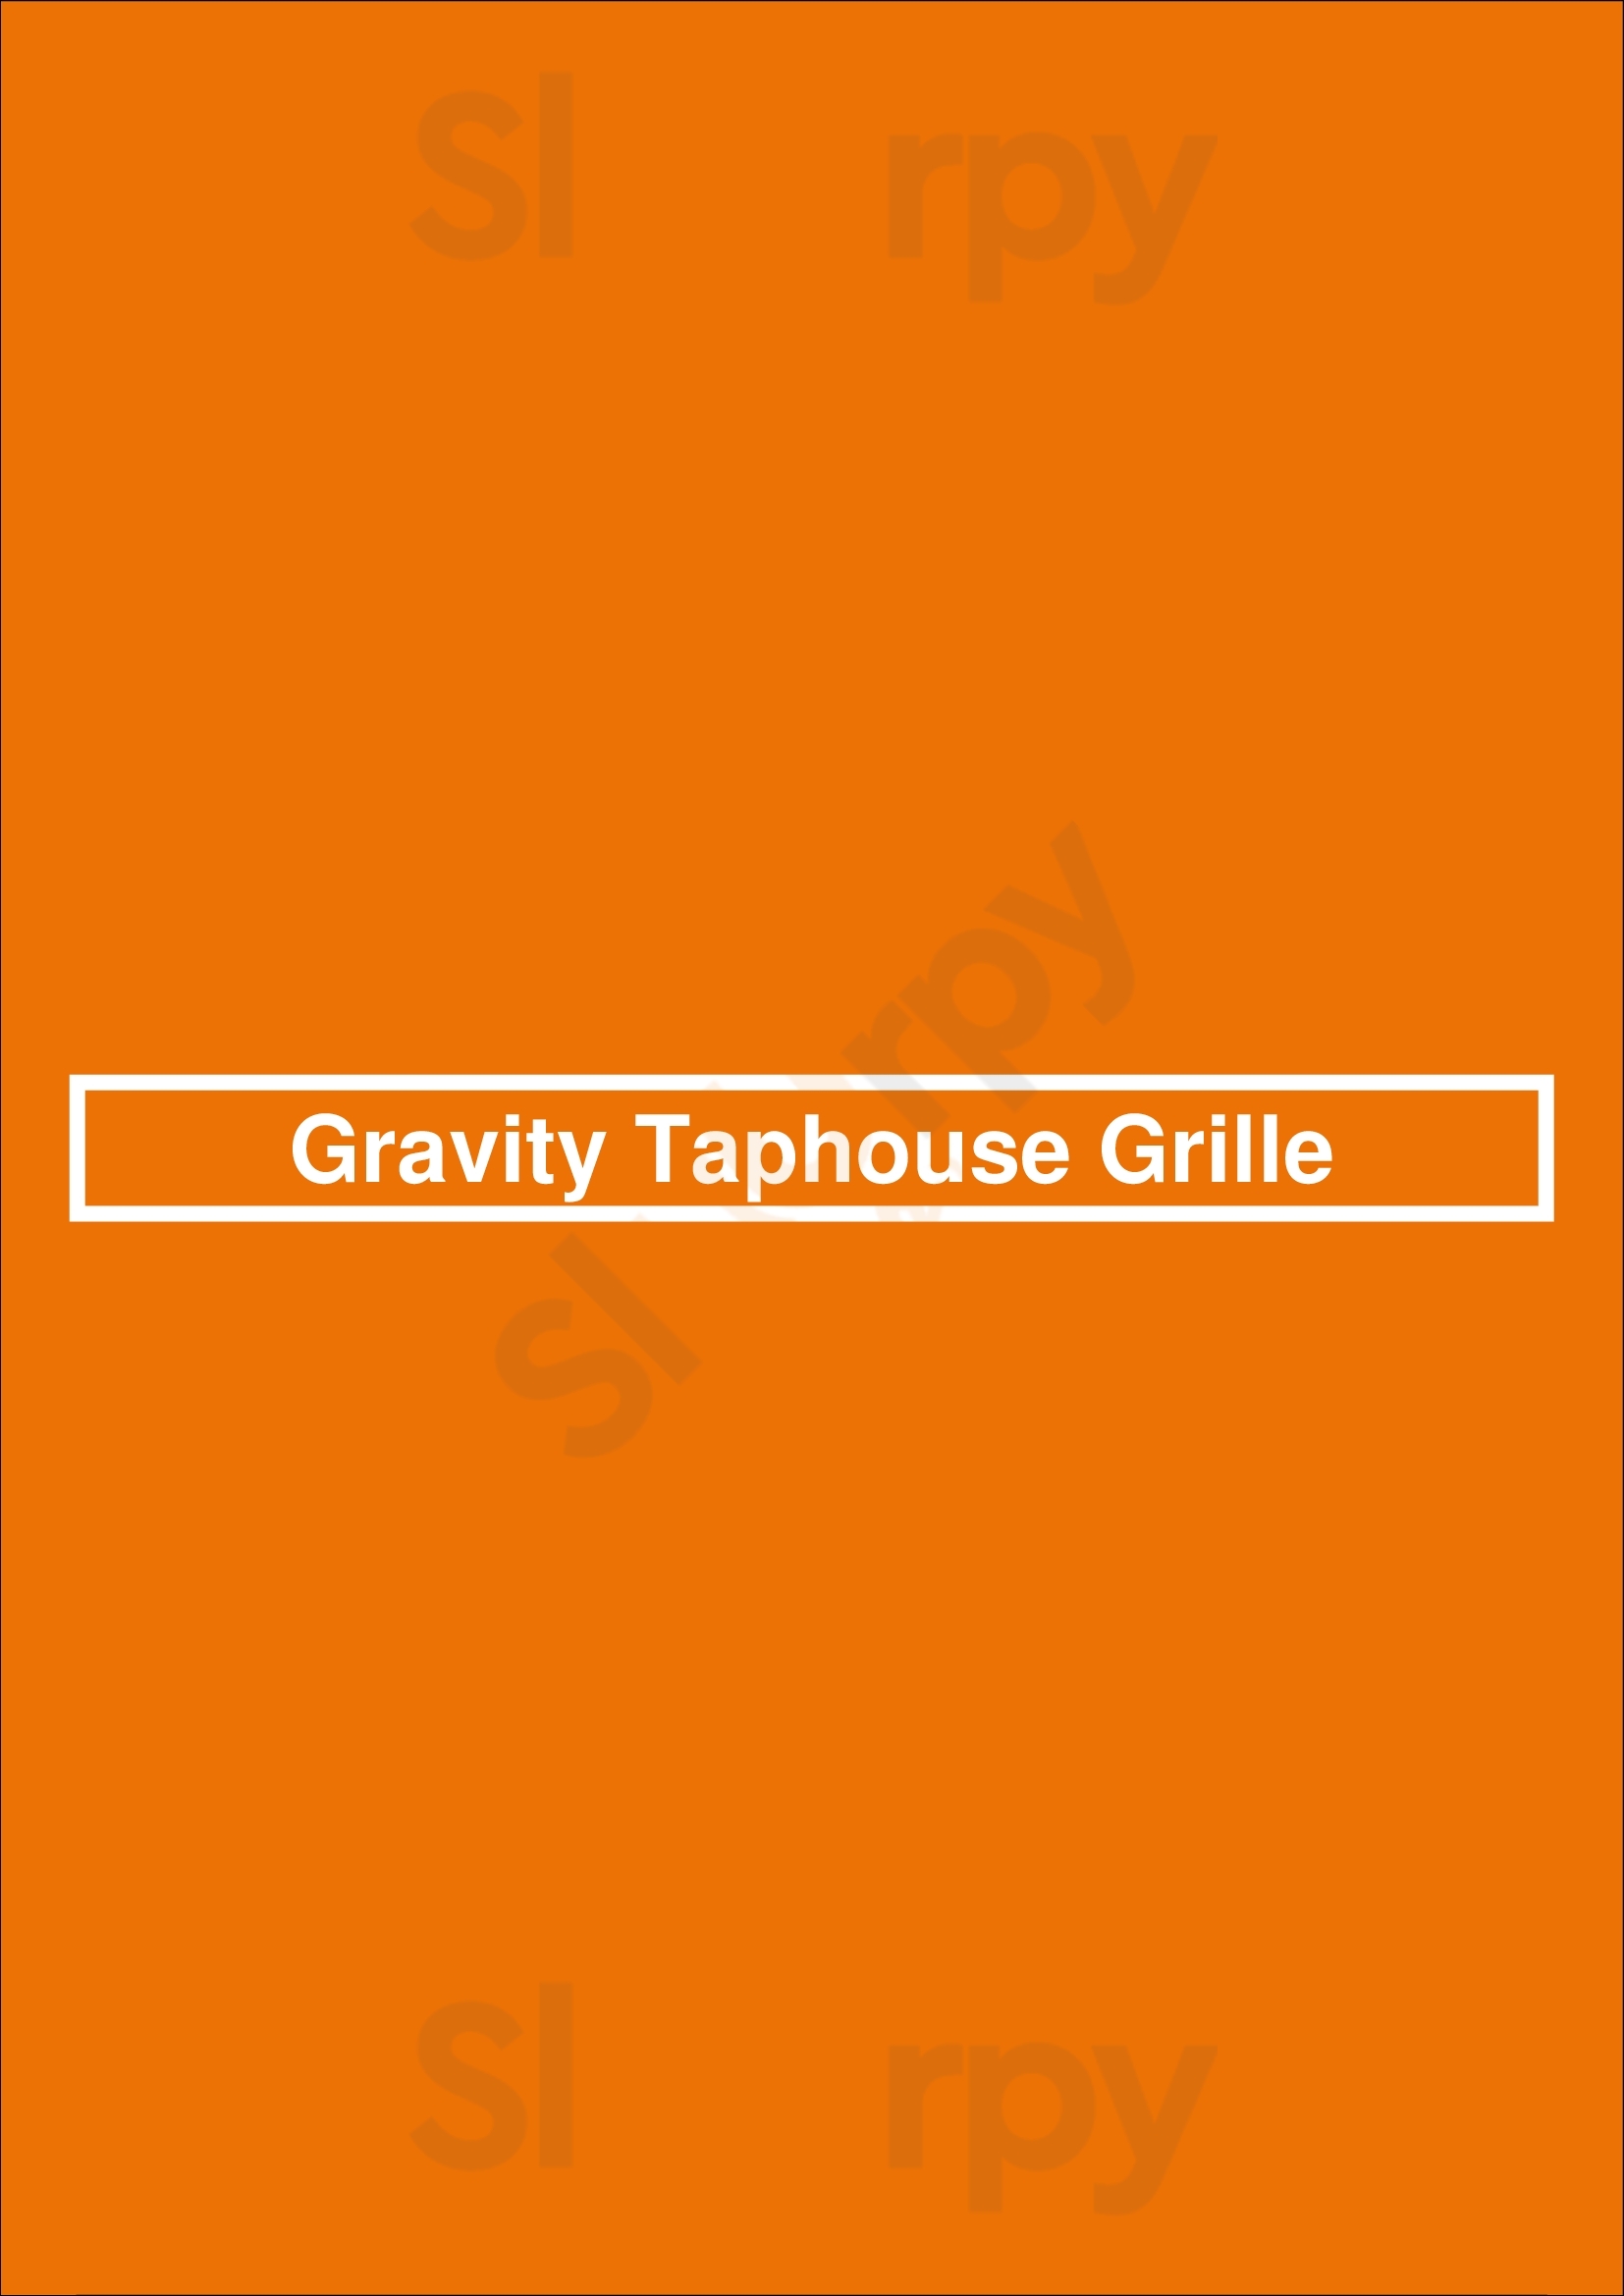 Gravity Taphouse Grille Grand Rapids Menu - 1